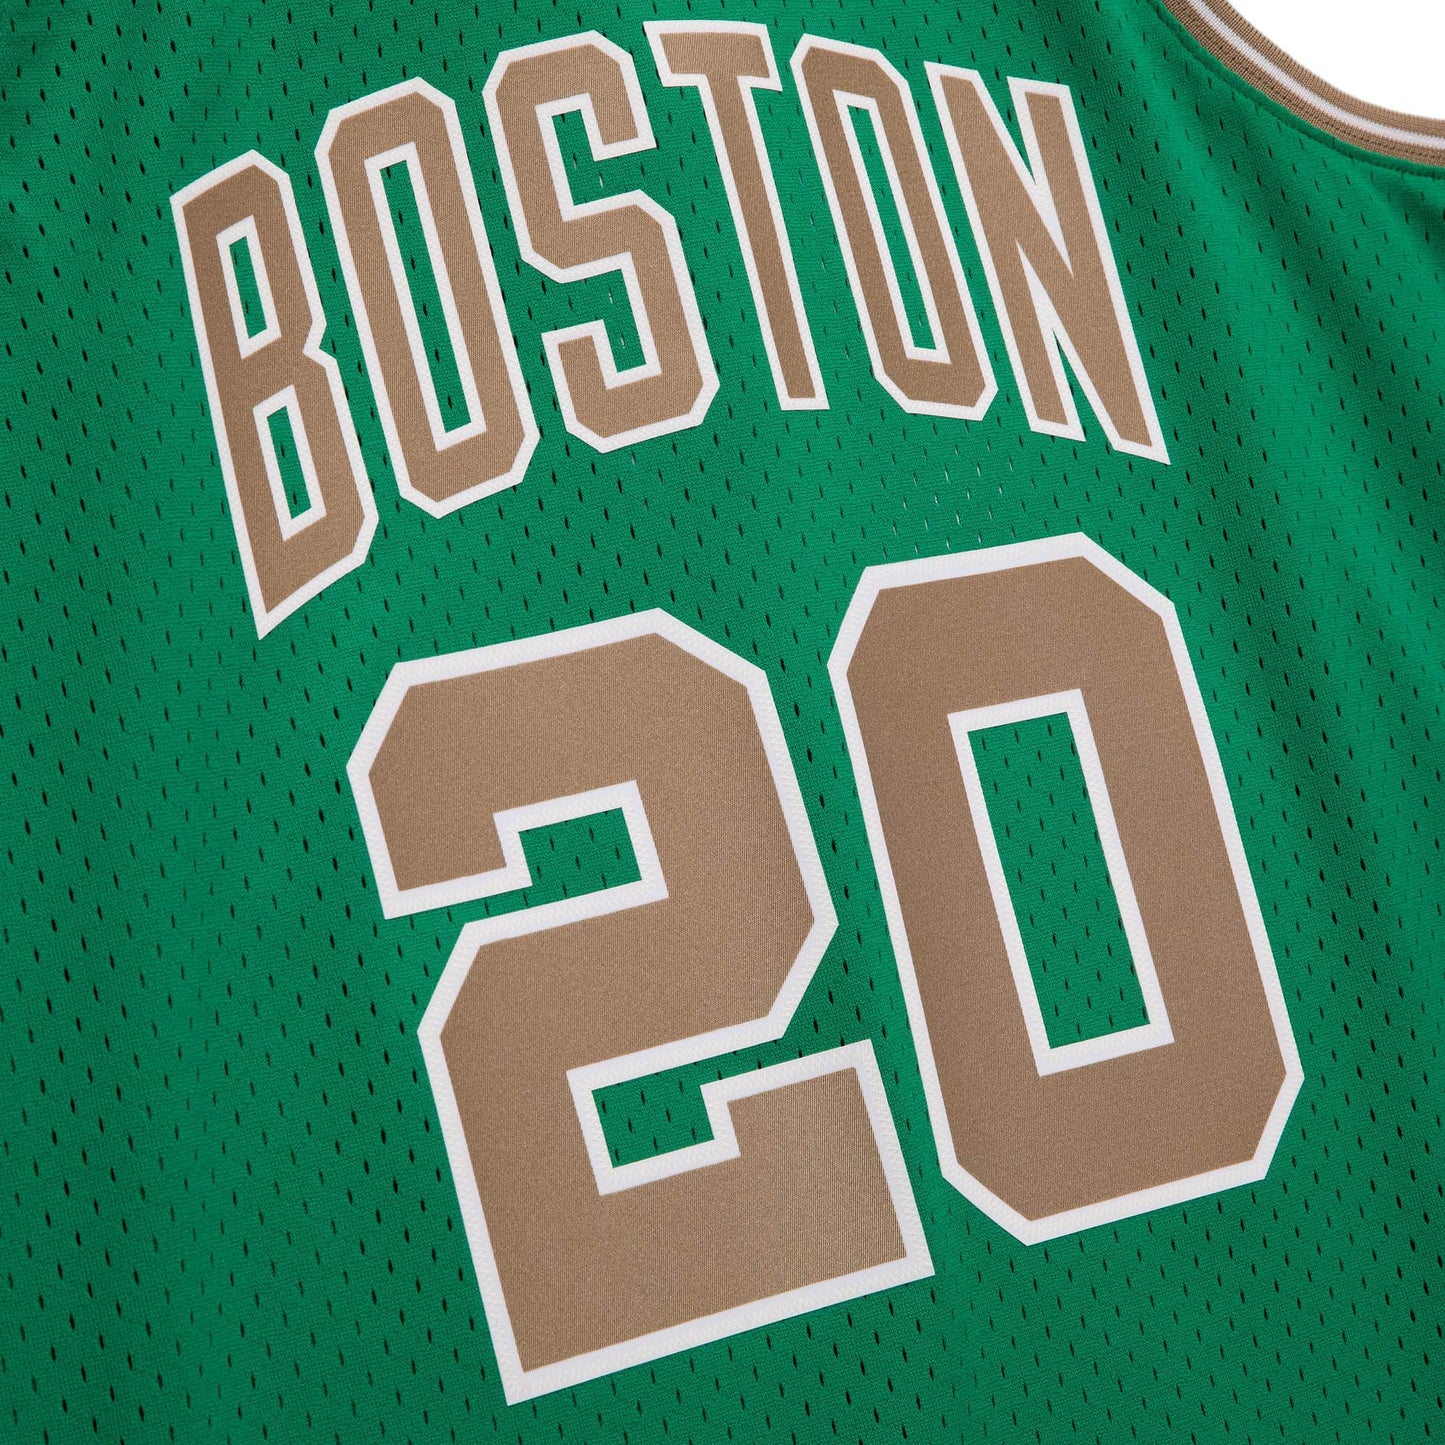 NBA St. Patrick's Day Swingman Jersey Boston Celtics 2007-08 Ray Allen